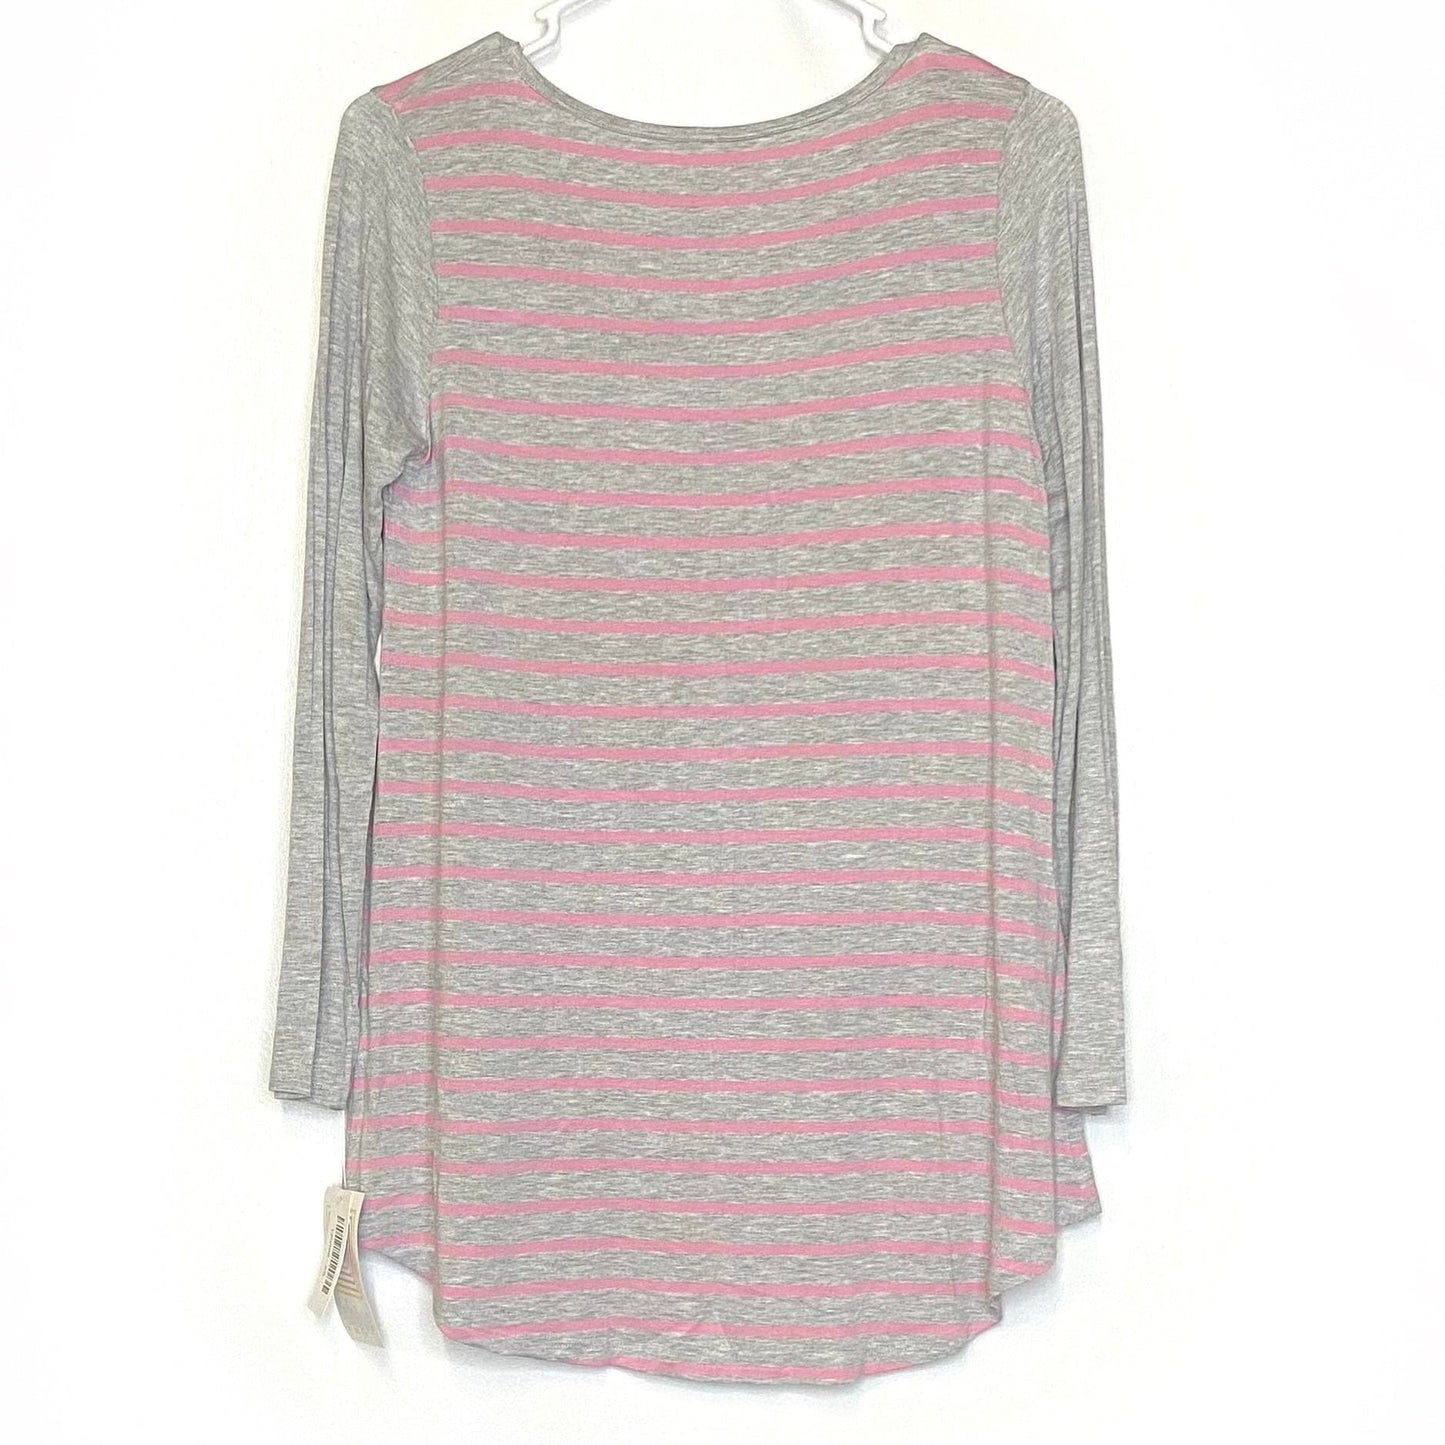 LuLaRoe Womens XS Light Gray/Pale Pink Stripes Lynnae L/s Activewear Top NWT